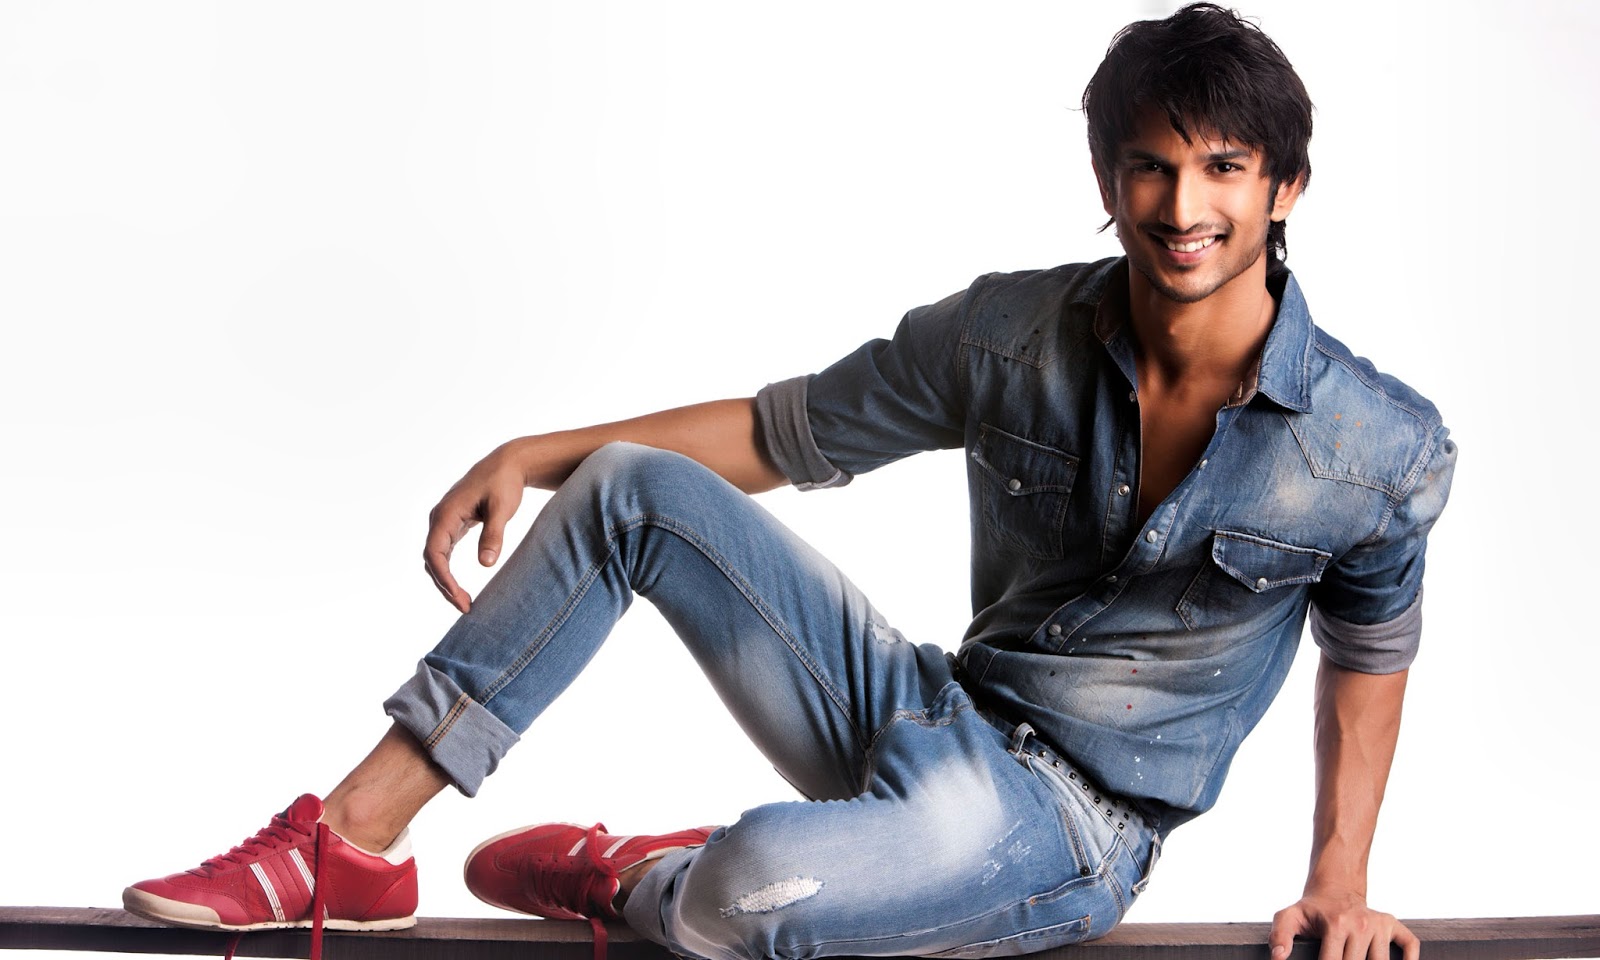 sushant singh rajput hd wallpaper,jeans,denim,sitting,clothing,cool